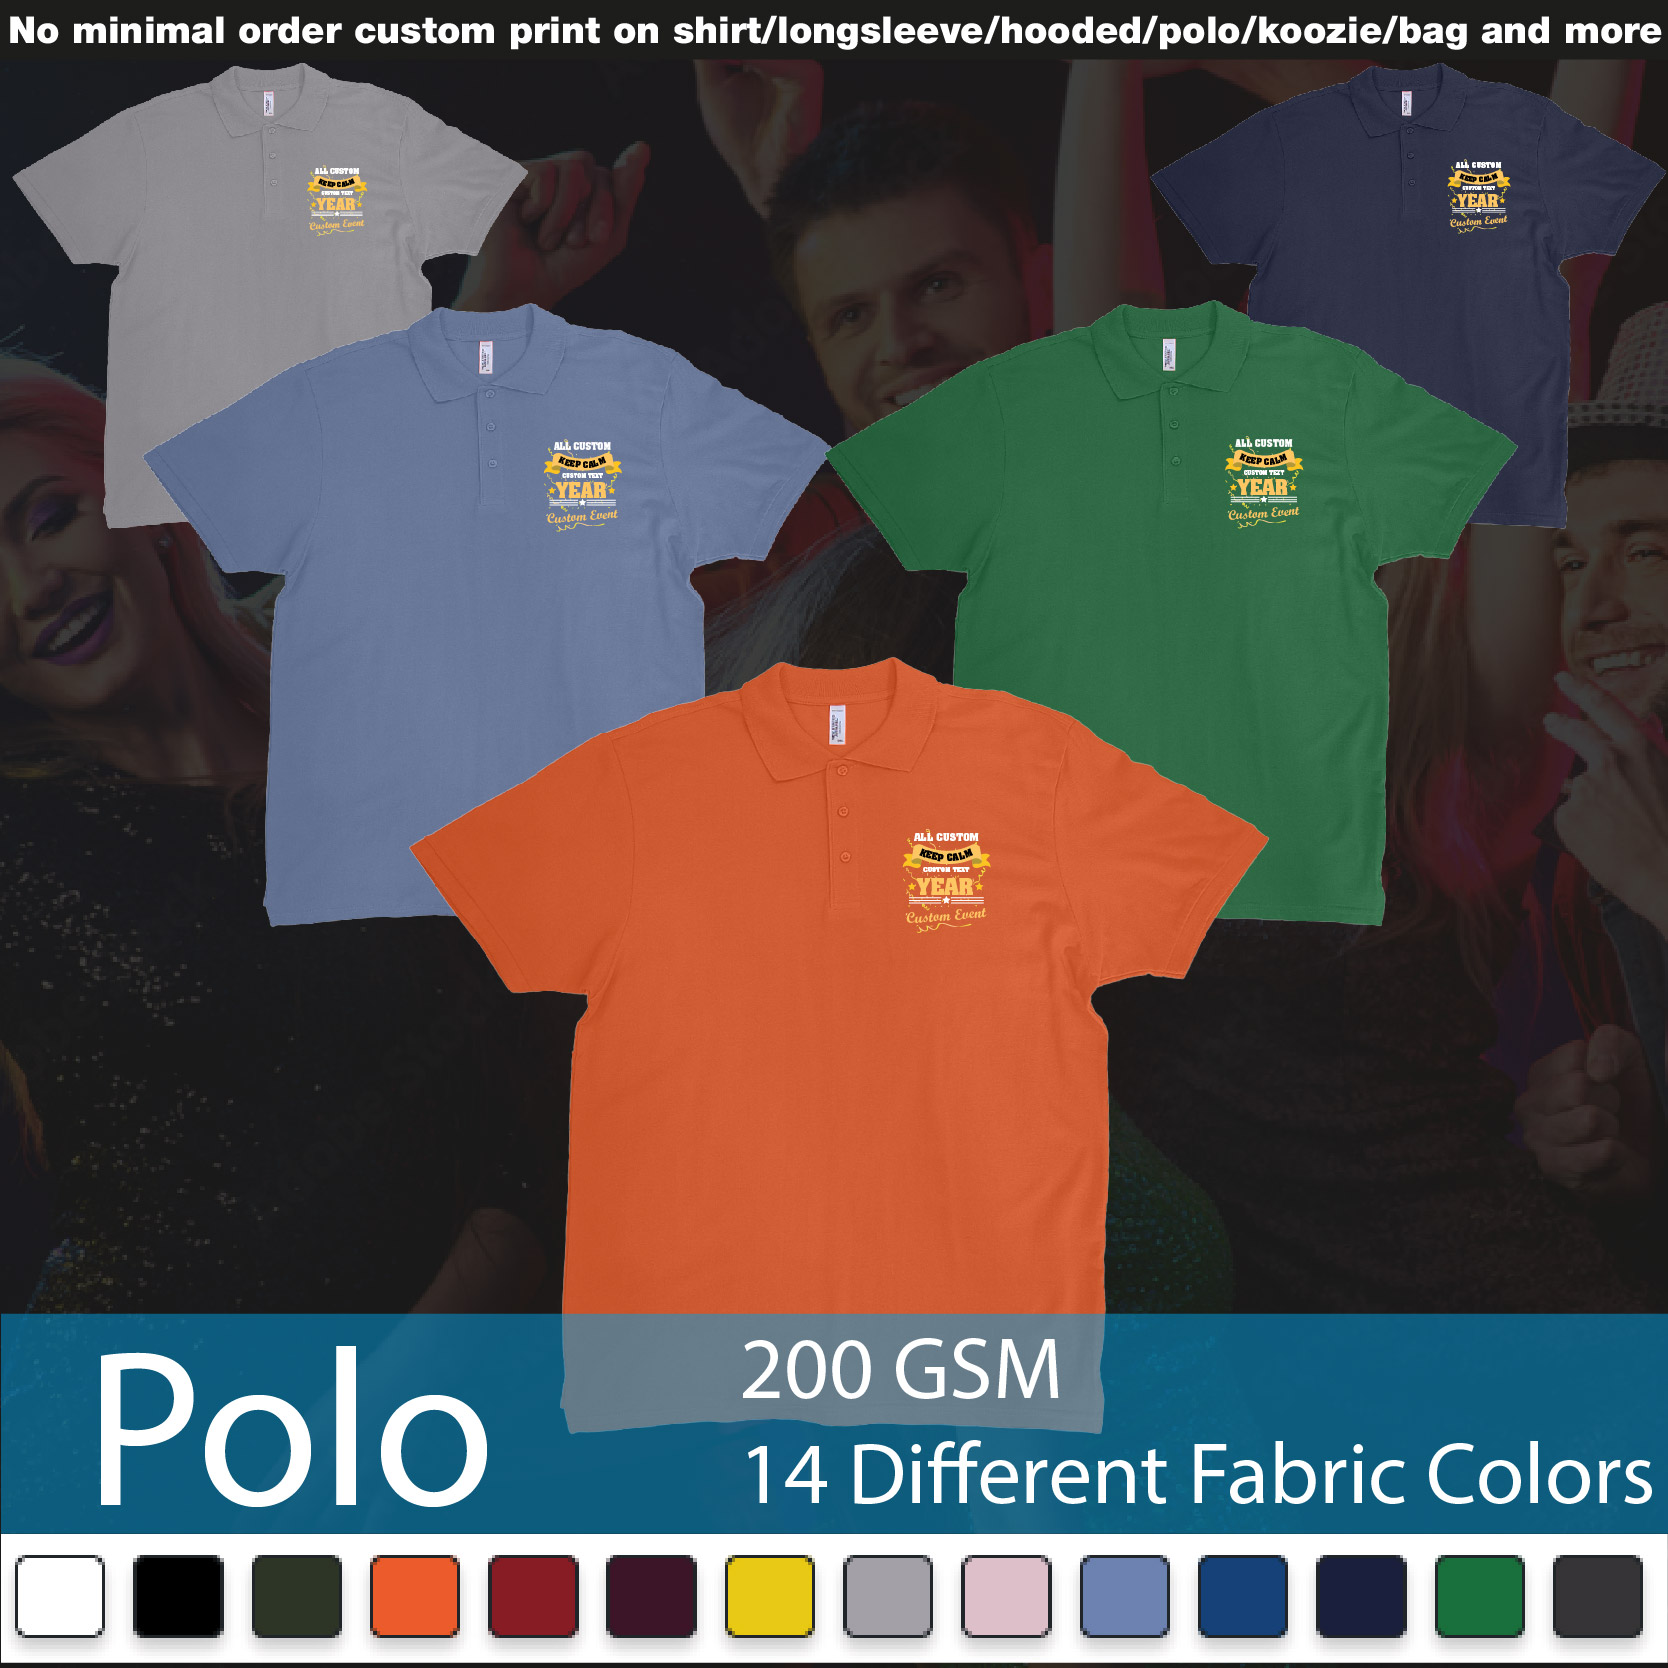 Keep Calm Event Party Birthday Bash Custom Design Text Polo Shirts Samples On Demand Printing Bali